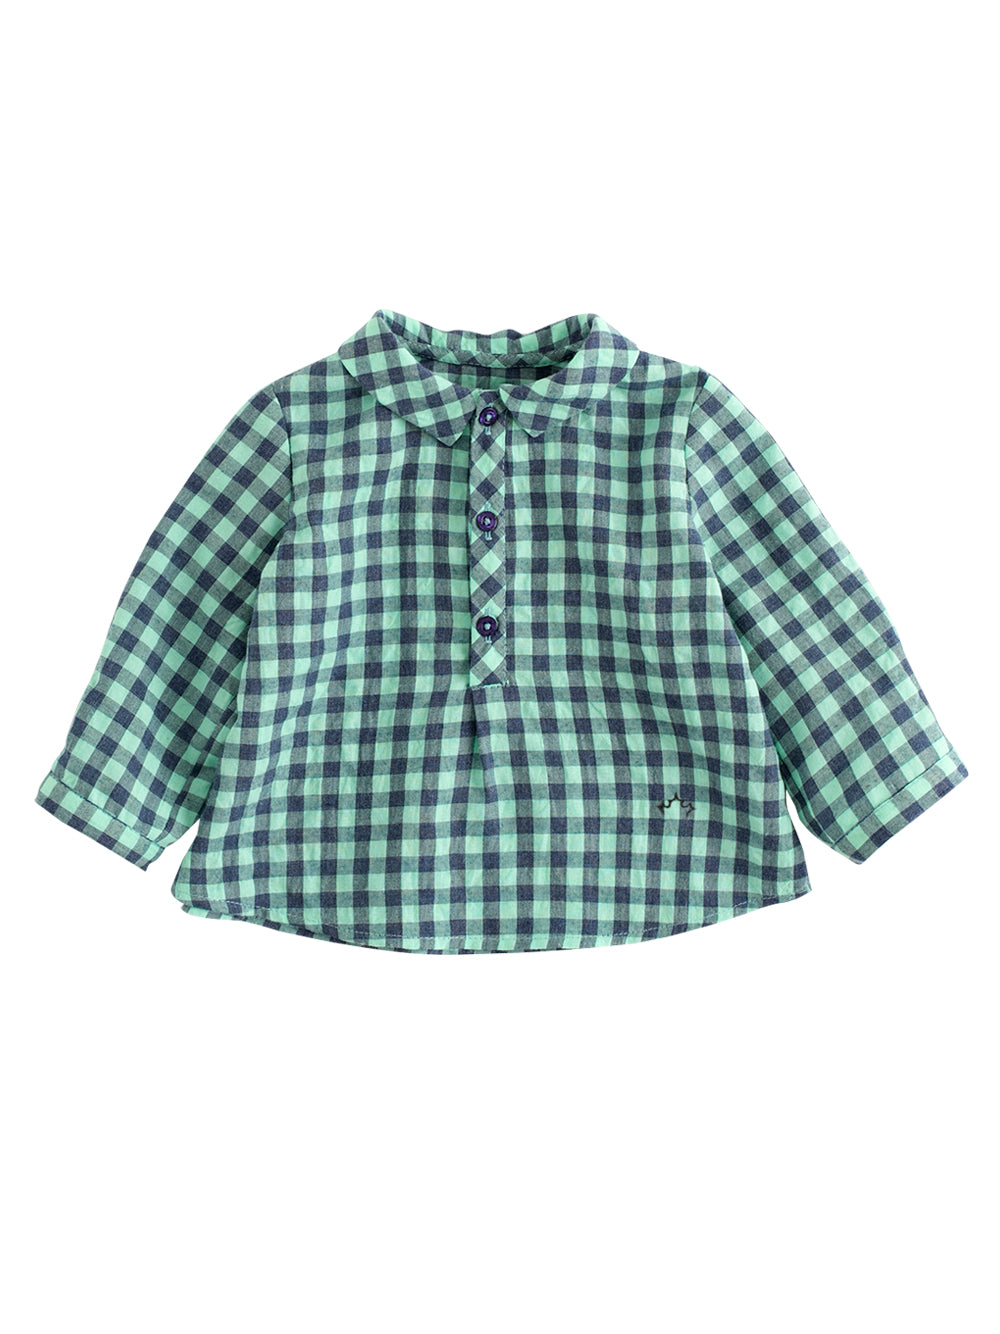 Green Checked Baby Shirt